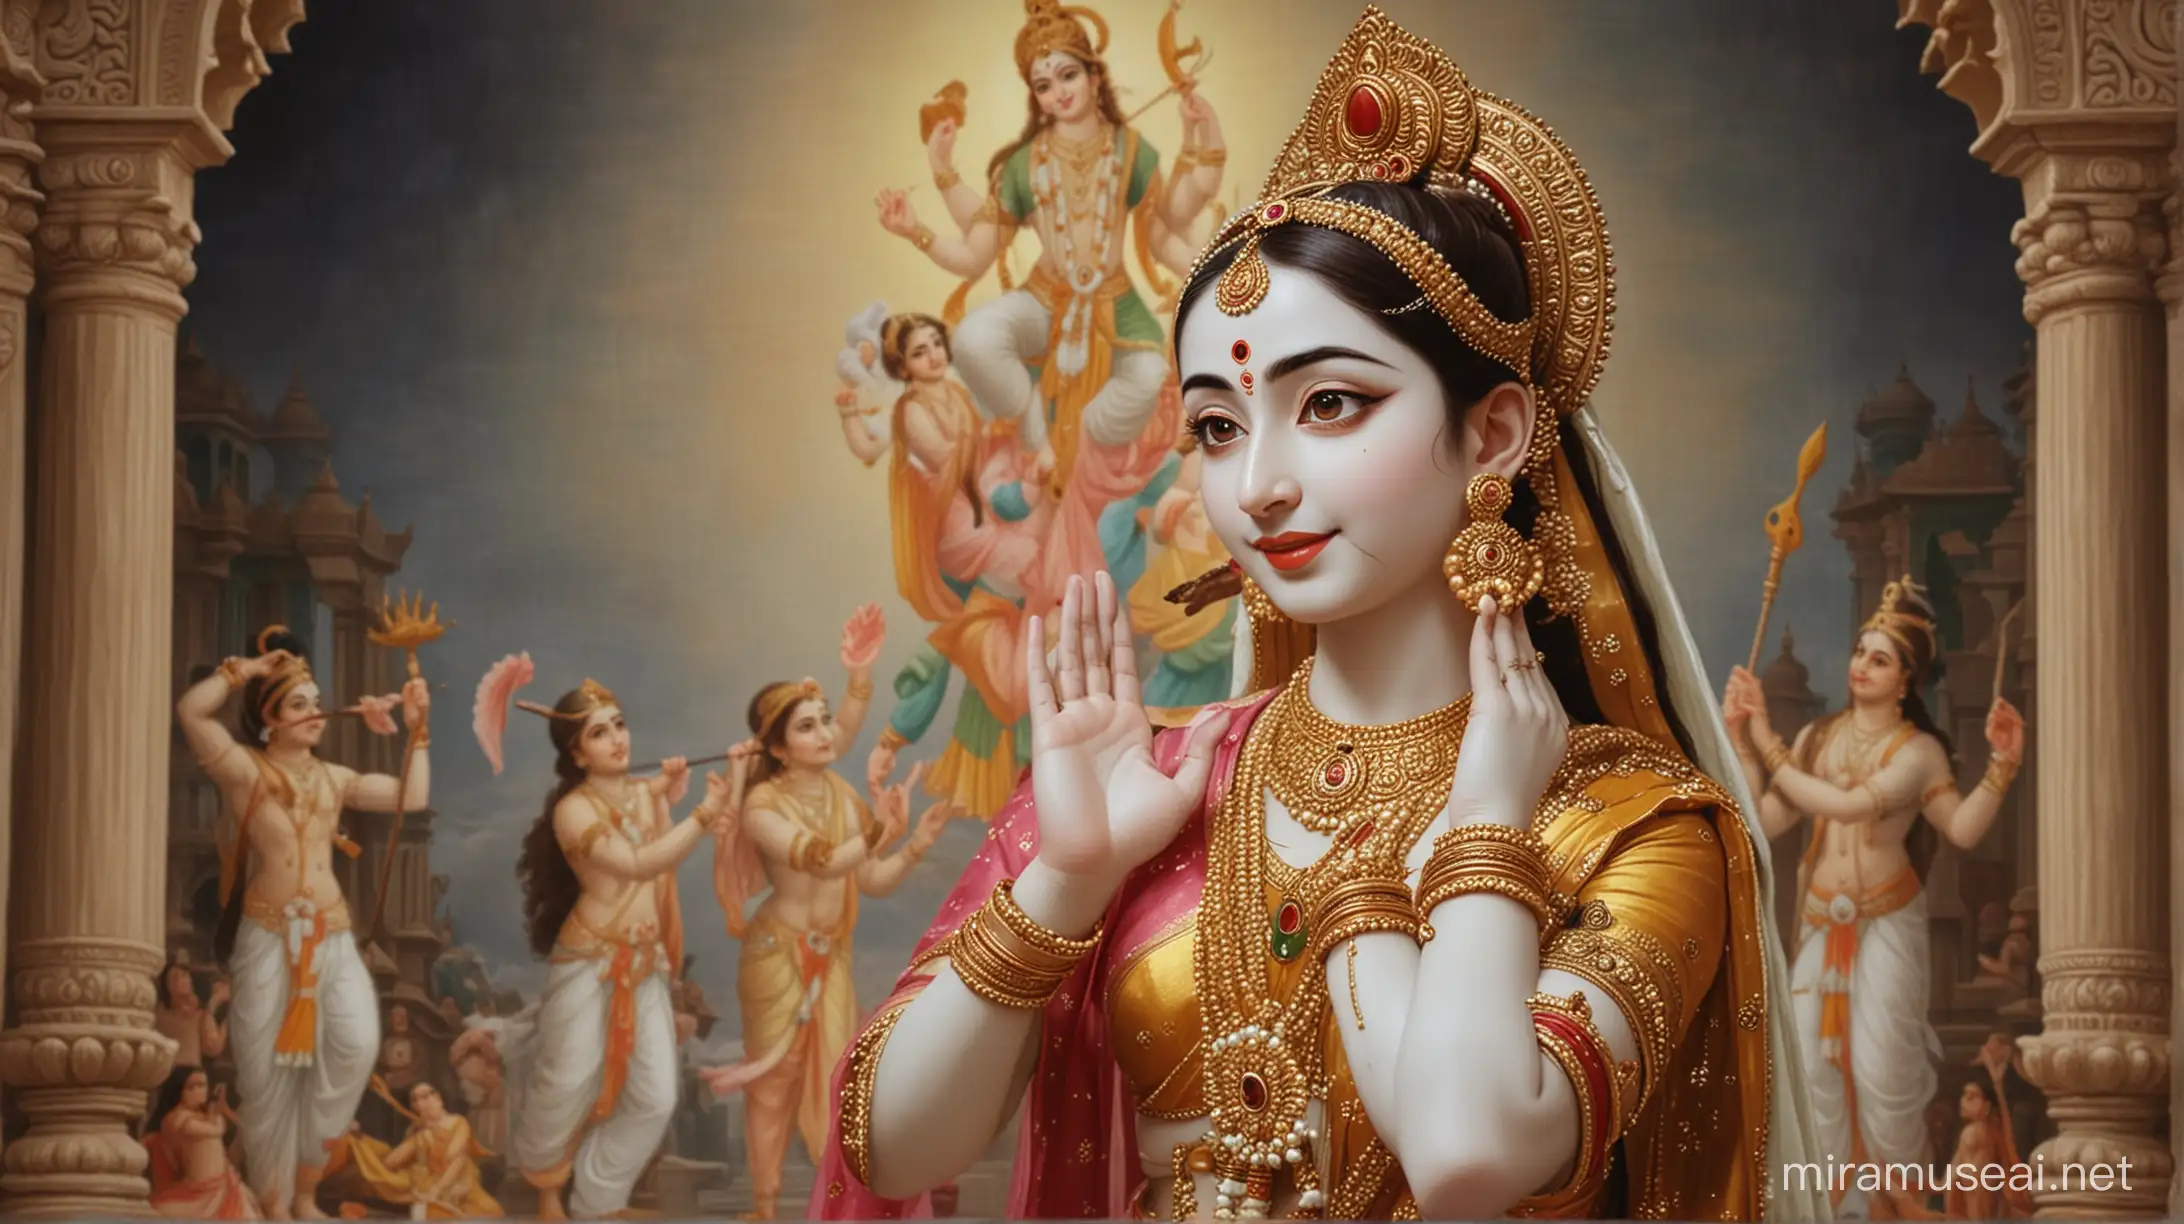 Mirabai image showing dedication to lord krishna with background scene of gokul